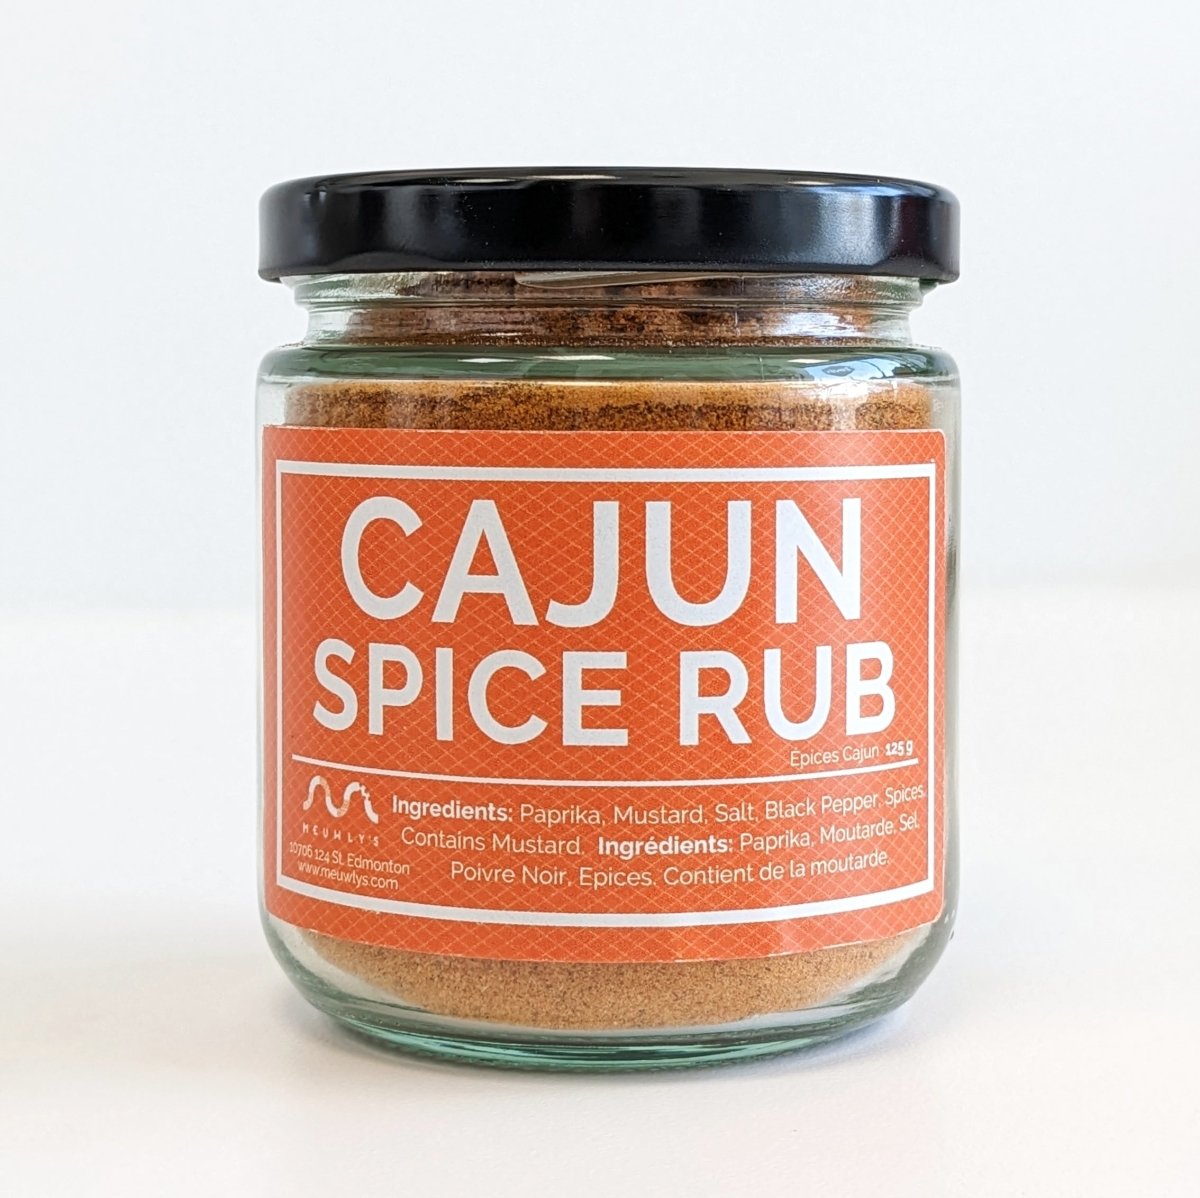 Cajun Spice Rub - 36 grams - Oonnie - Meuwly's